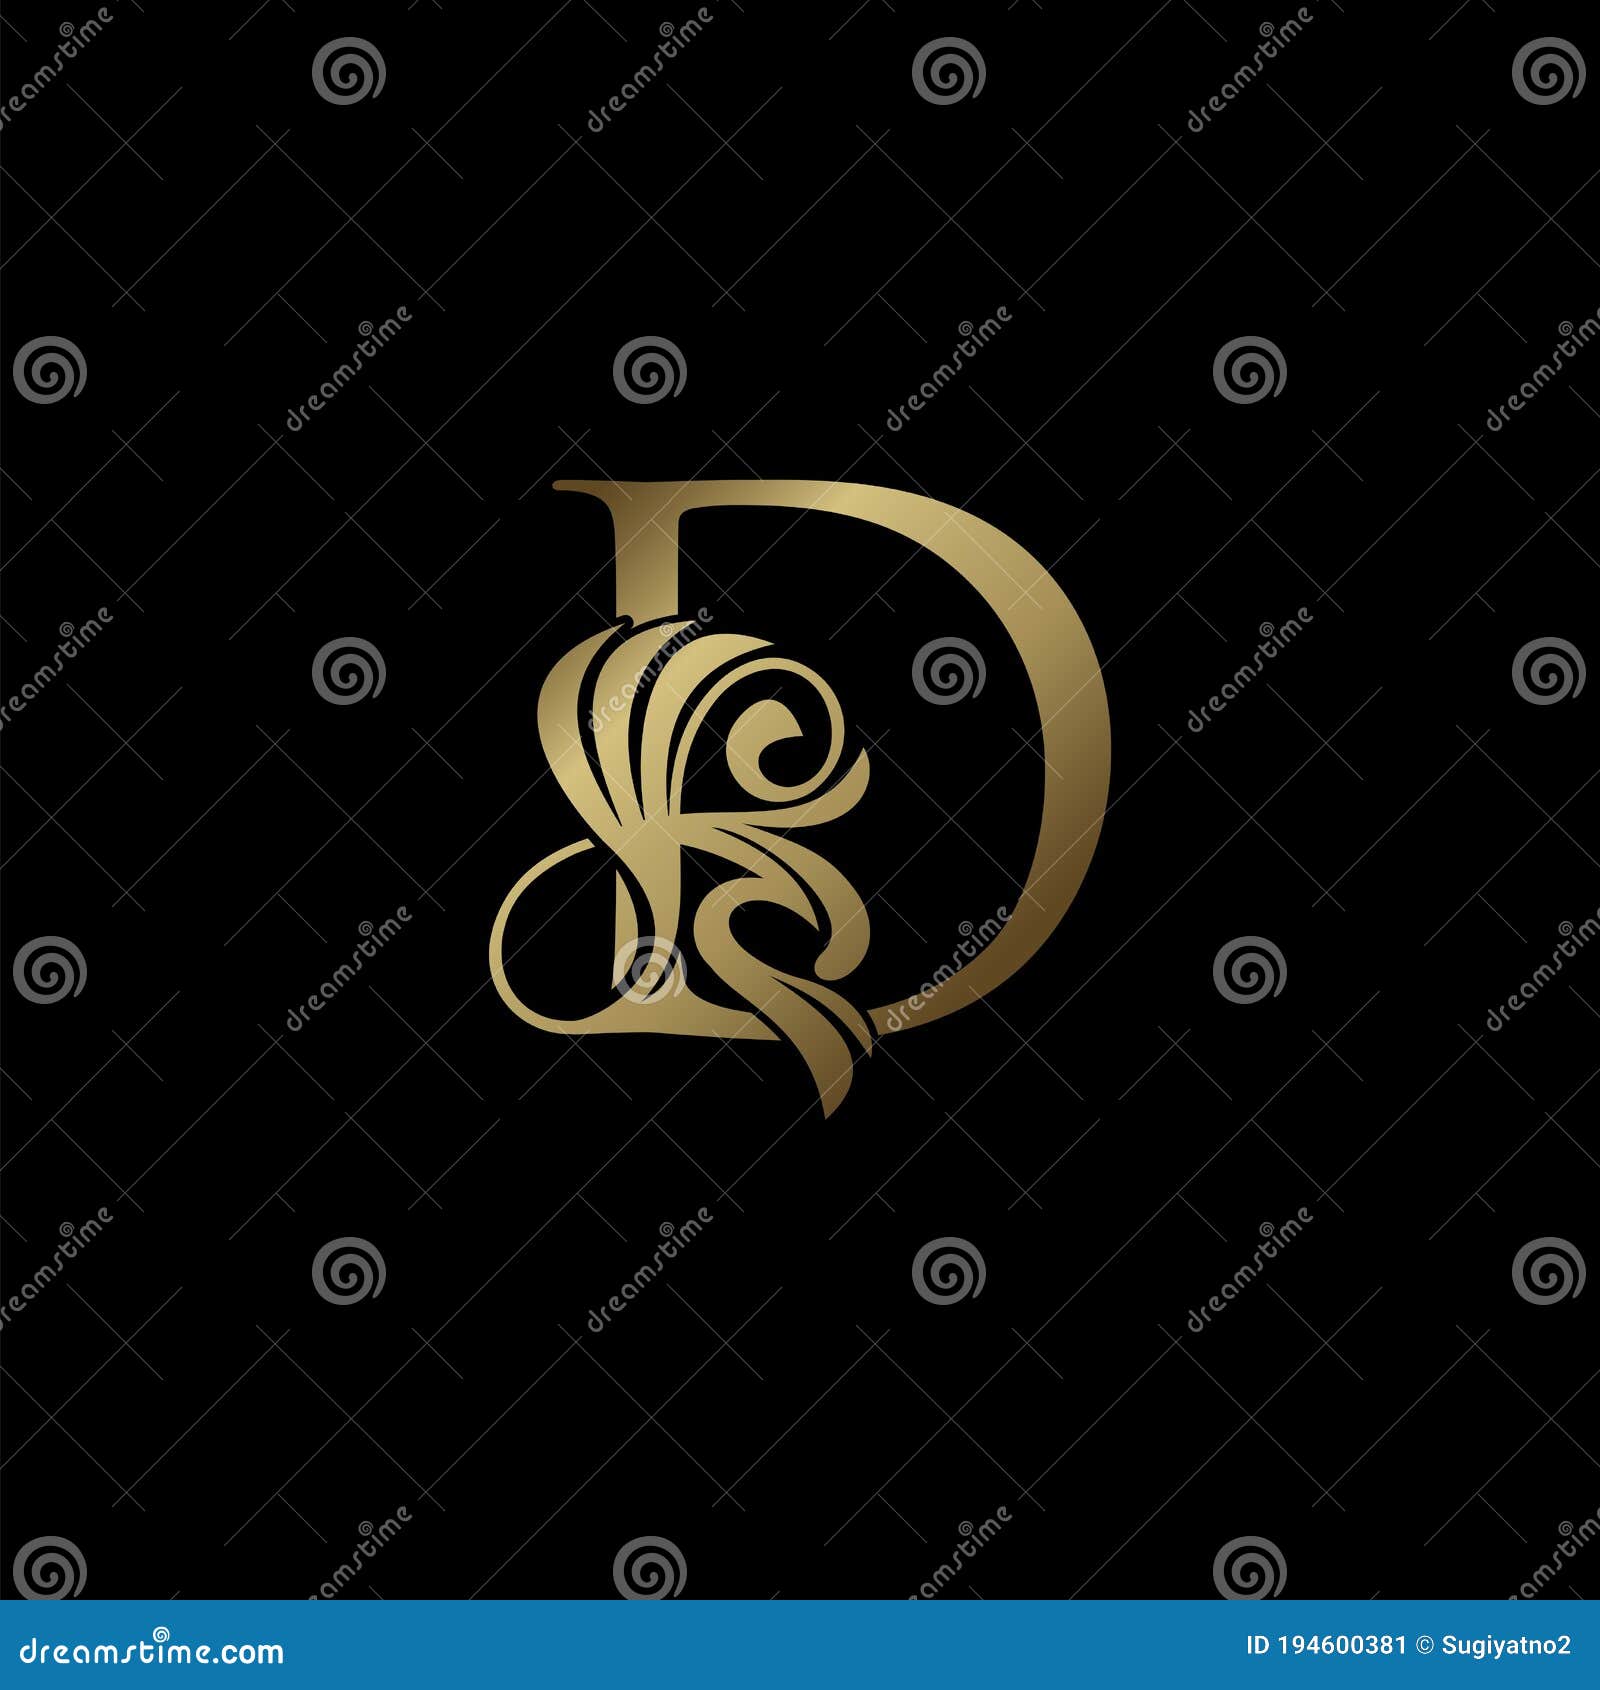 Gold Deco Luxury D Letter Initial Logo Icon, Monogram Ornate Swirl Wing ...